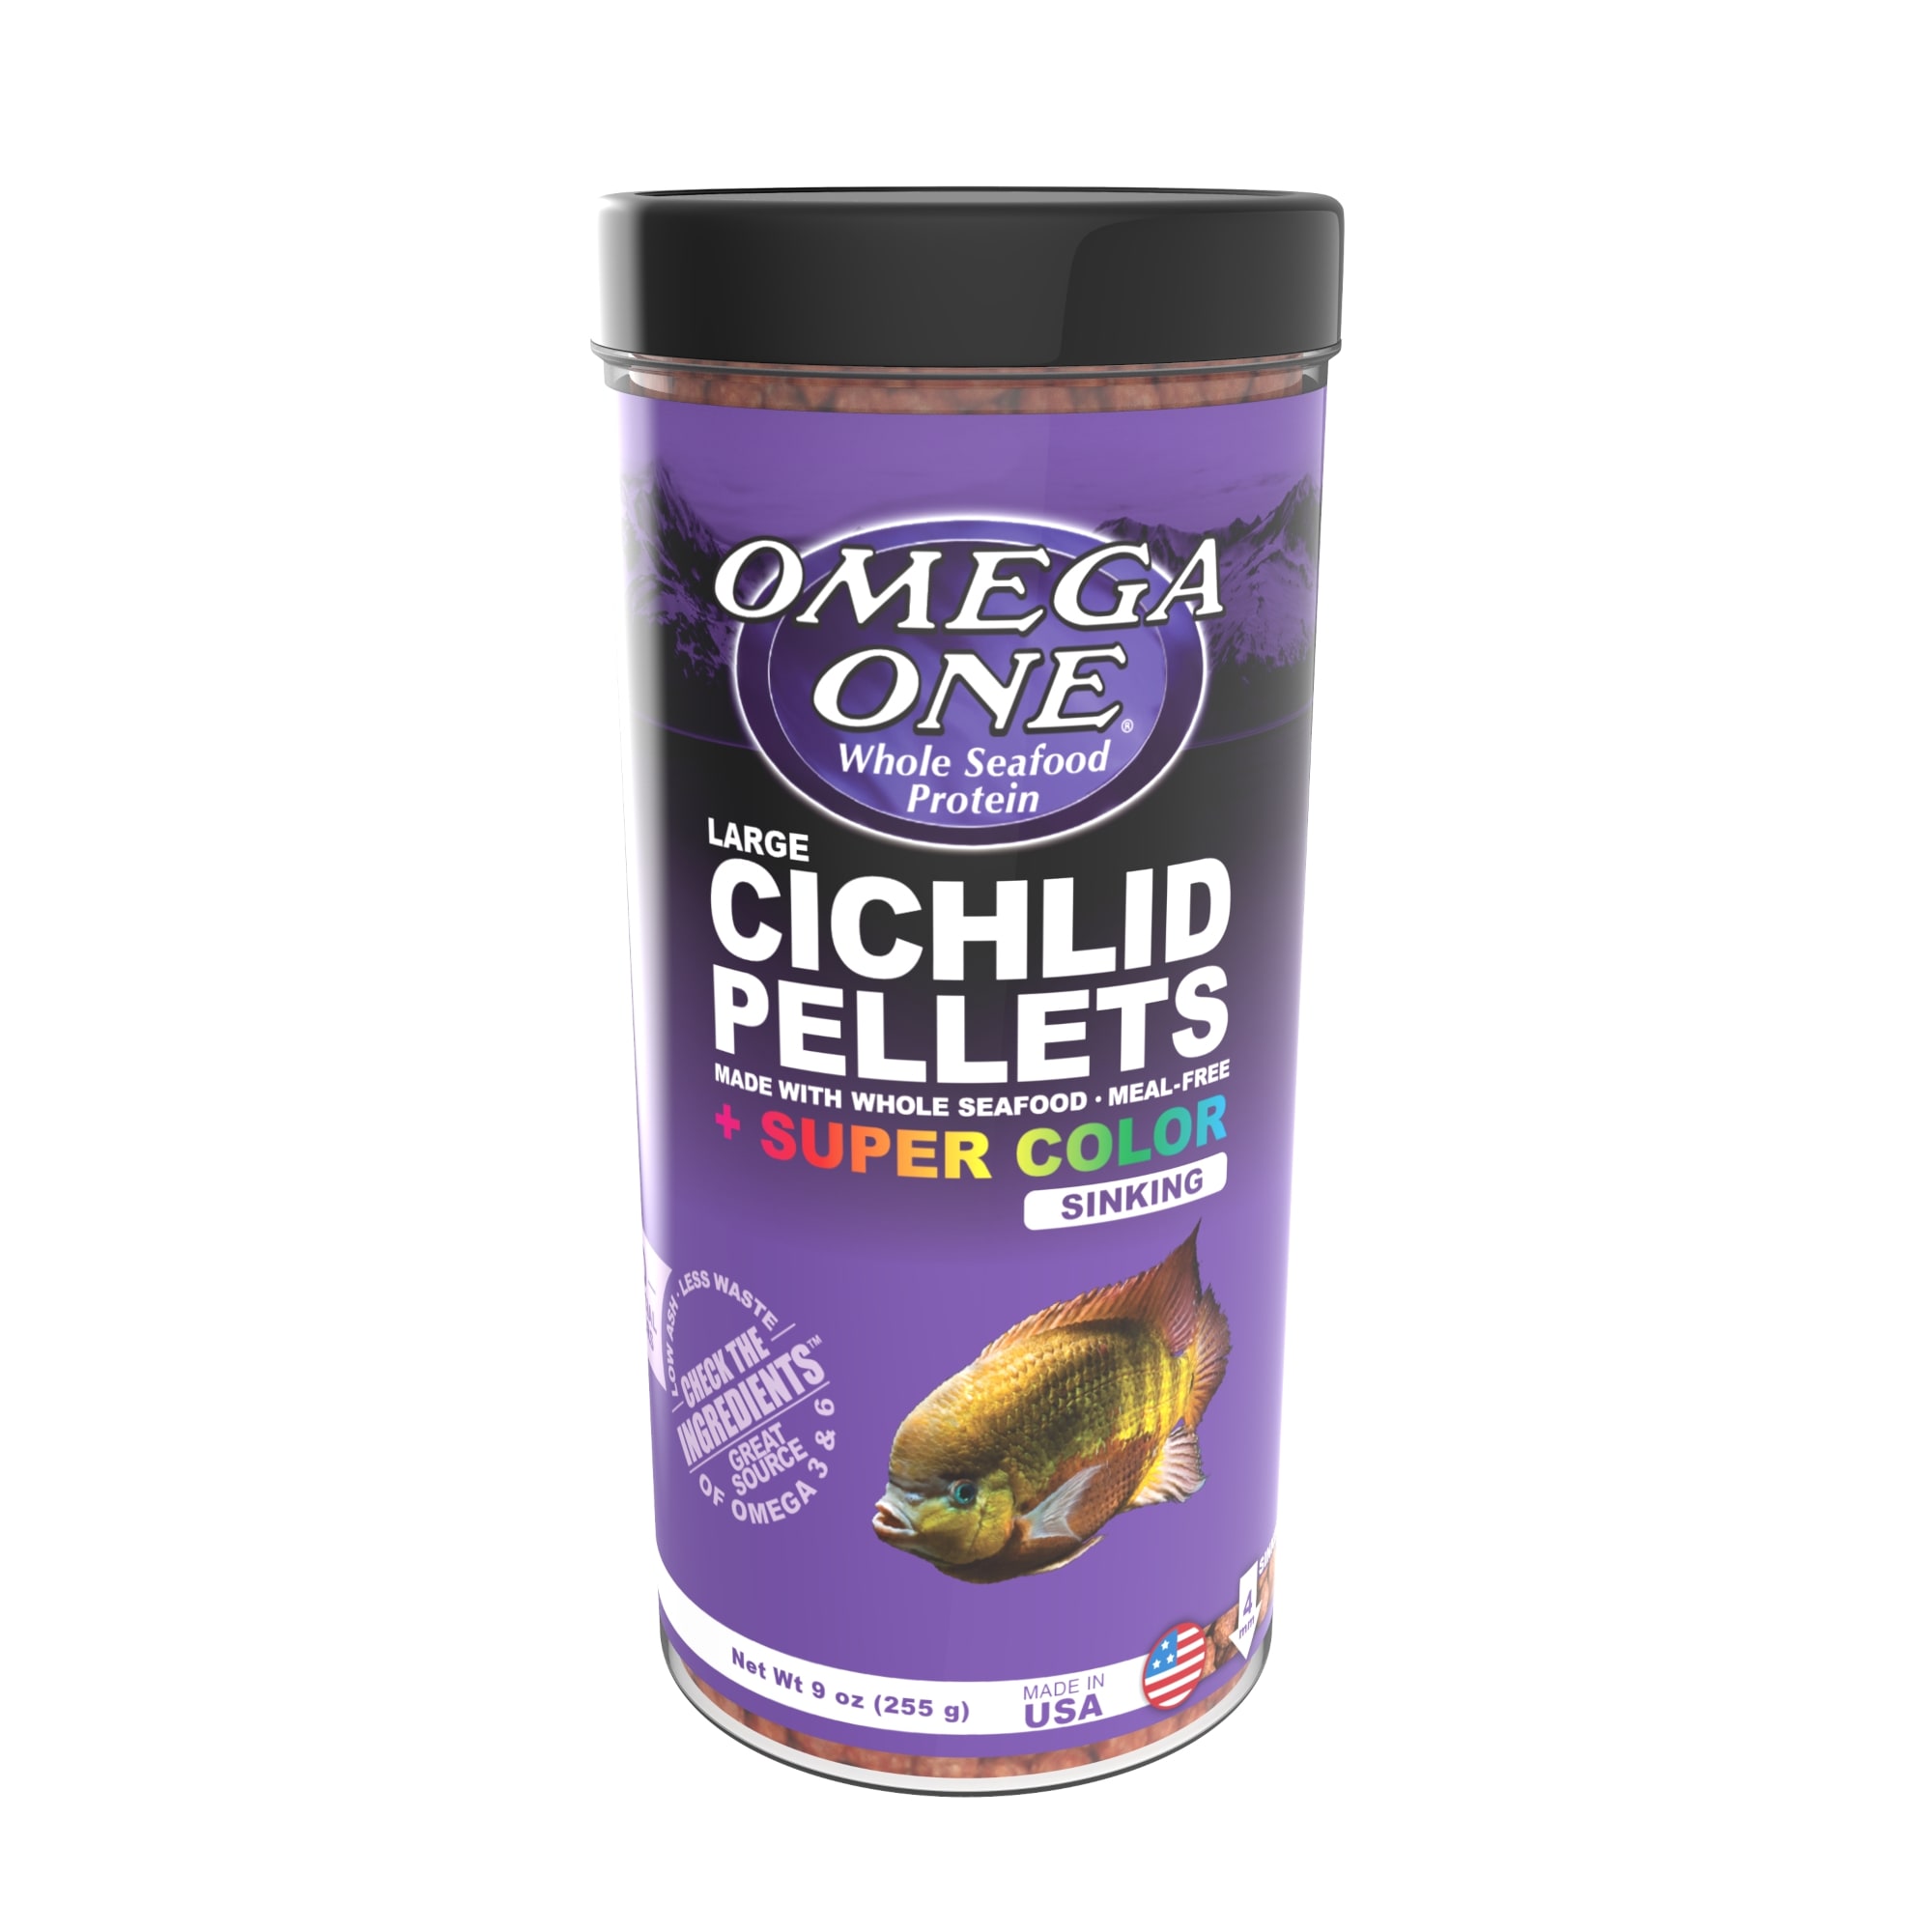 Cichlid Food – Pet Supplies Empire